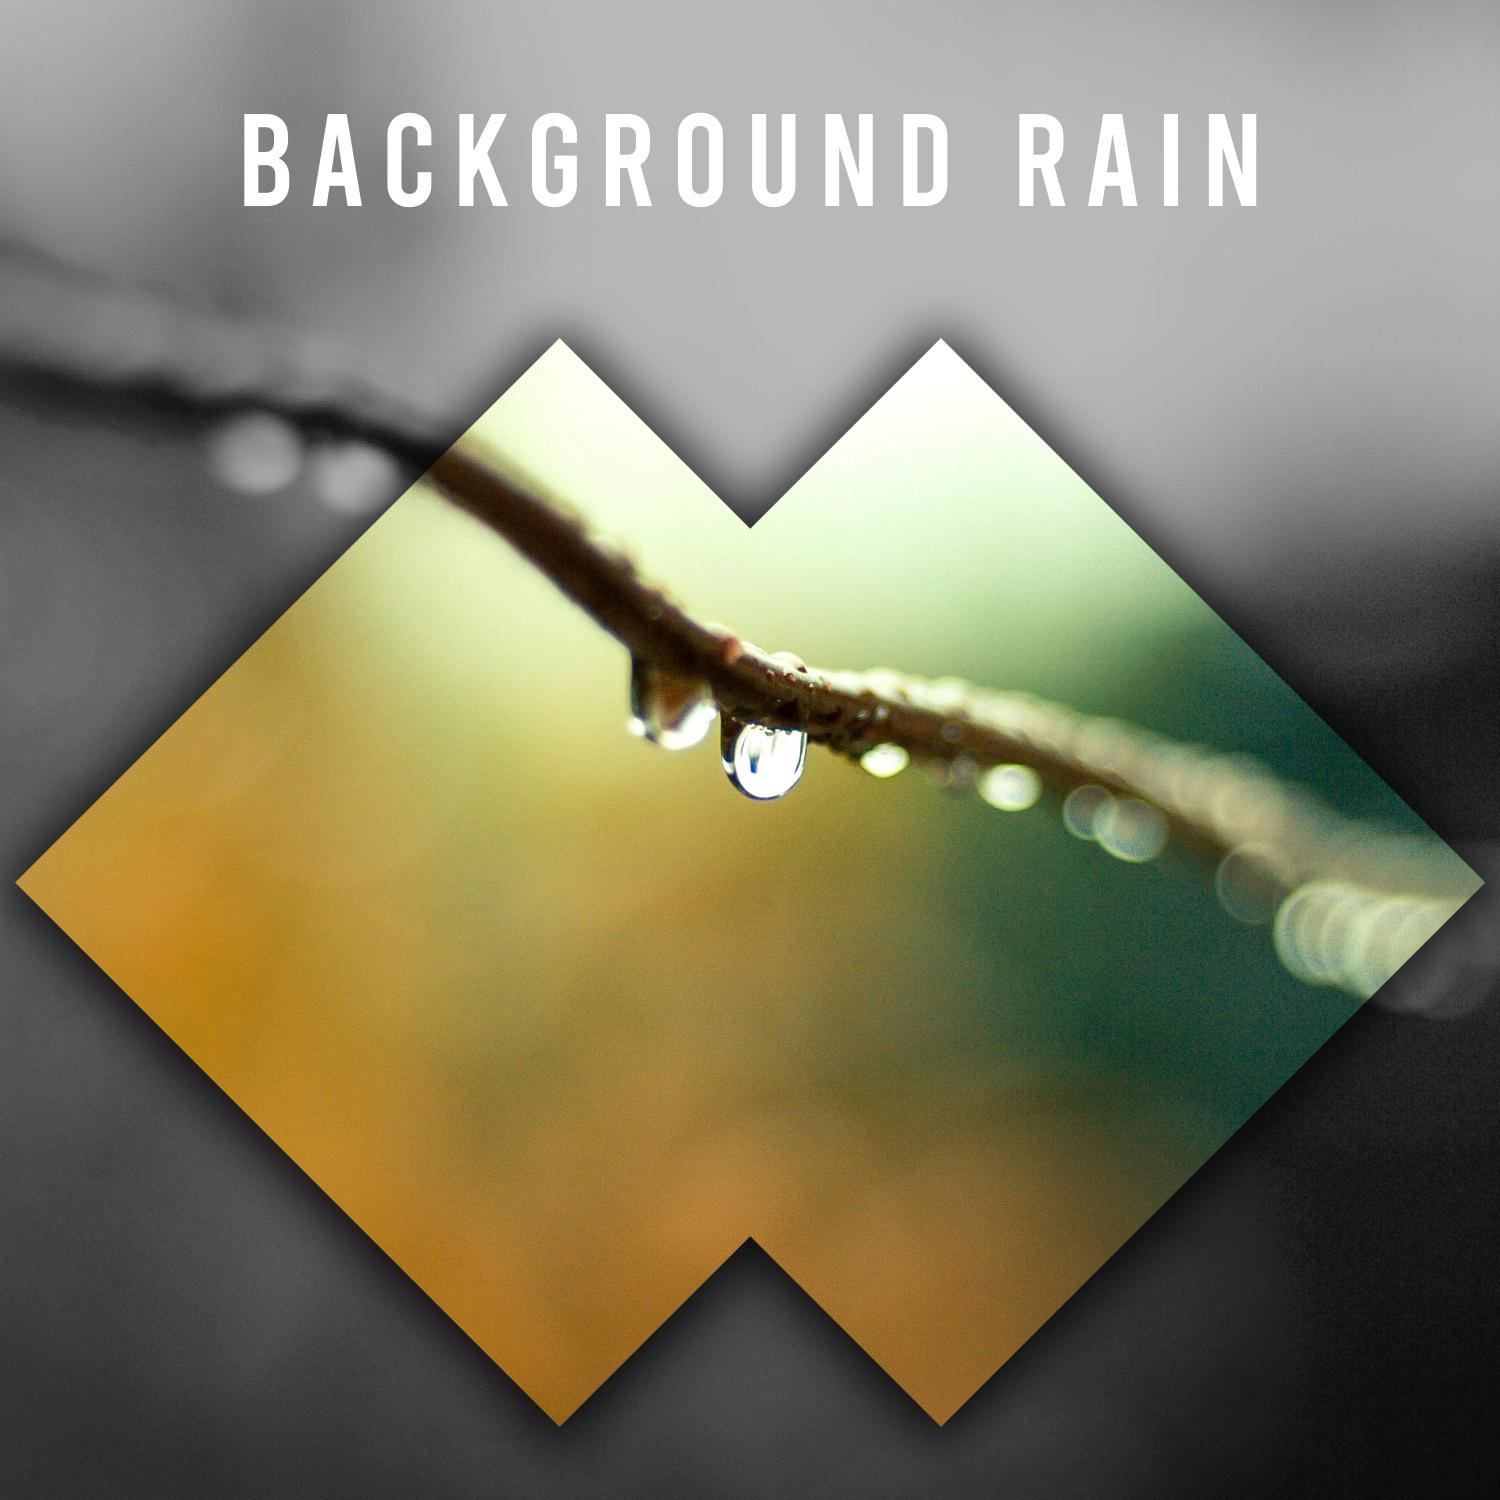 10 Background Rain Storms to Sleep Eight Hours